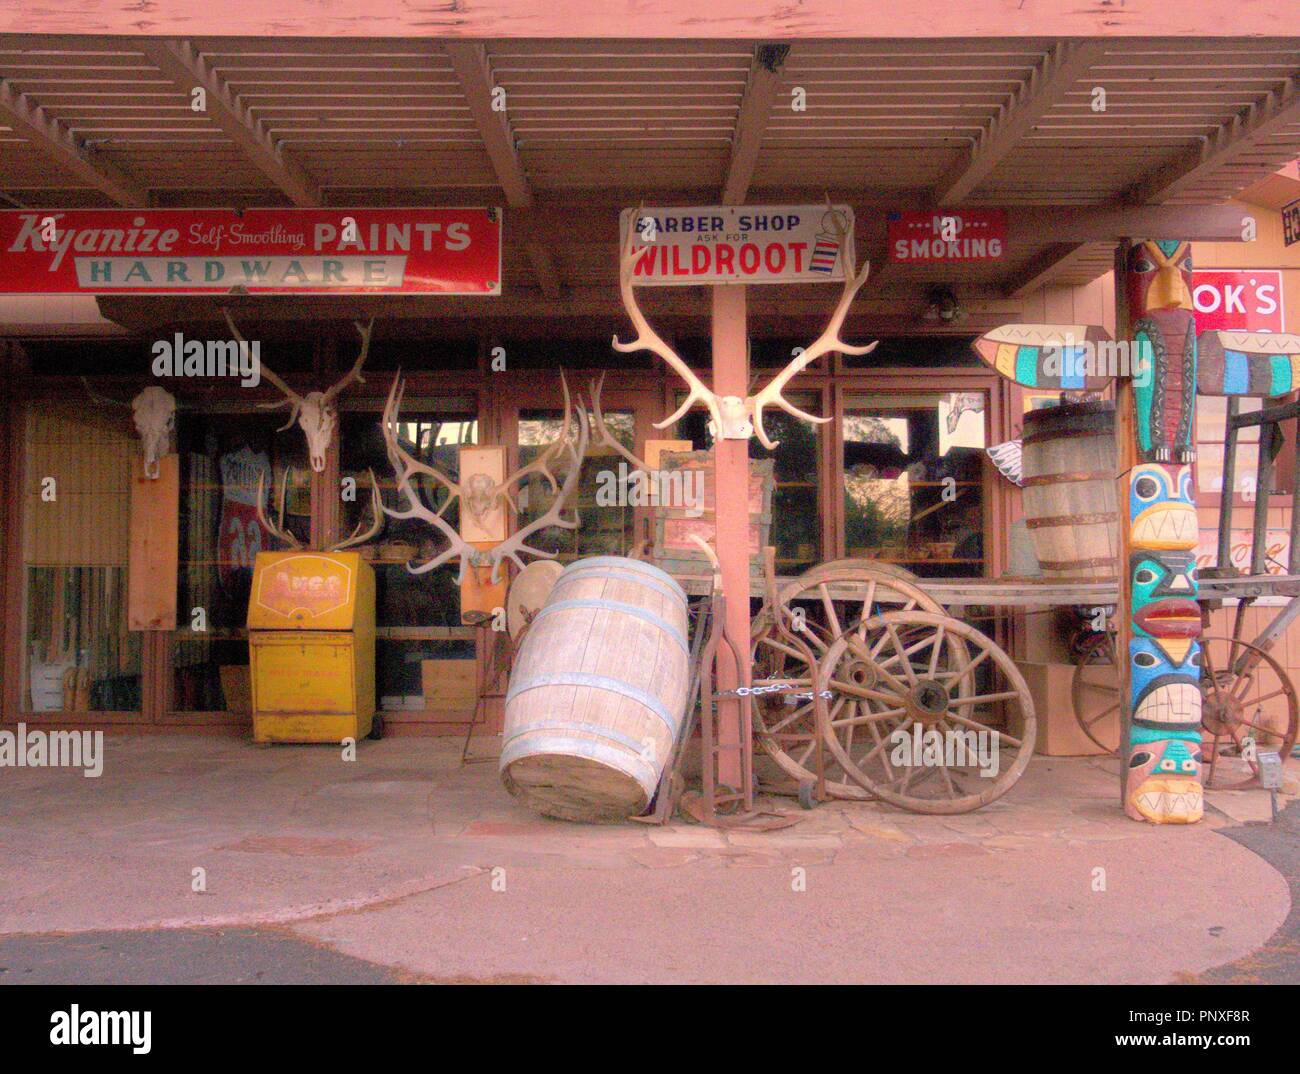 Old store in Sedona, AZ selling Old Wild West memorabilia. Stock Photo